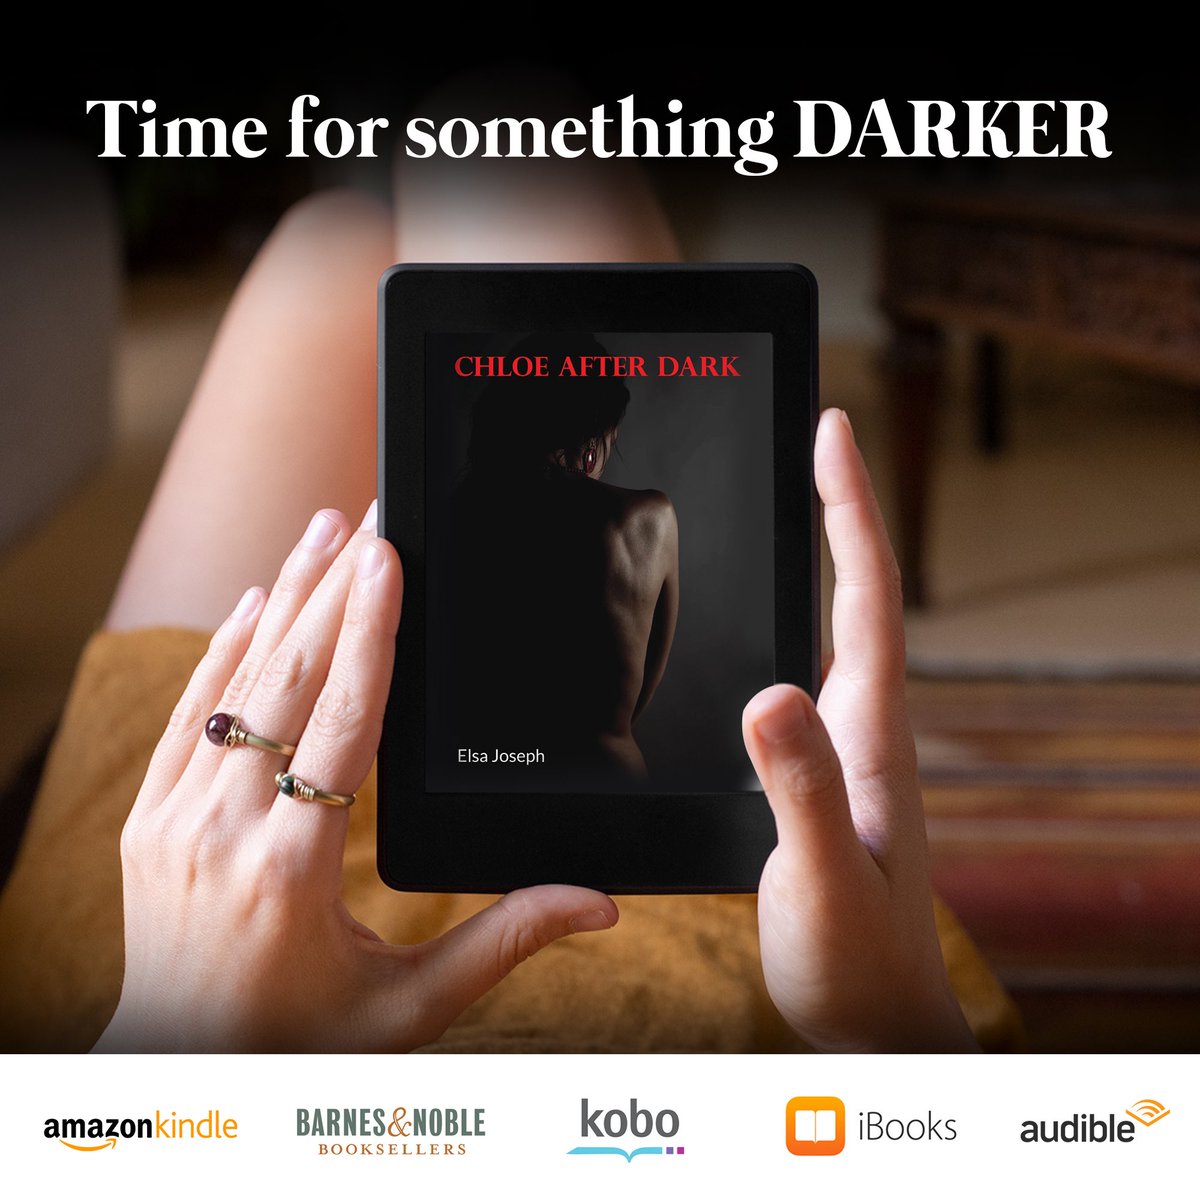 Read Chloe After Dark by Elsa Joseph

◦amazon.com/Chloe-After-Da…

#book #elsajoseph #chloeafterdark #readers #romance #newbook #goodreads #eroticfiction #bookcommunity #booklover #bookworm #bookaddiction #audiobook